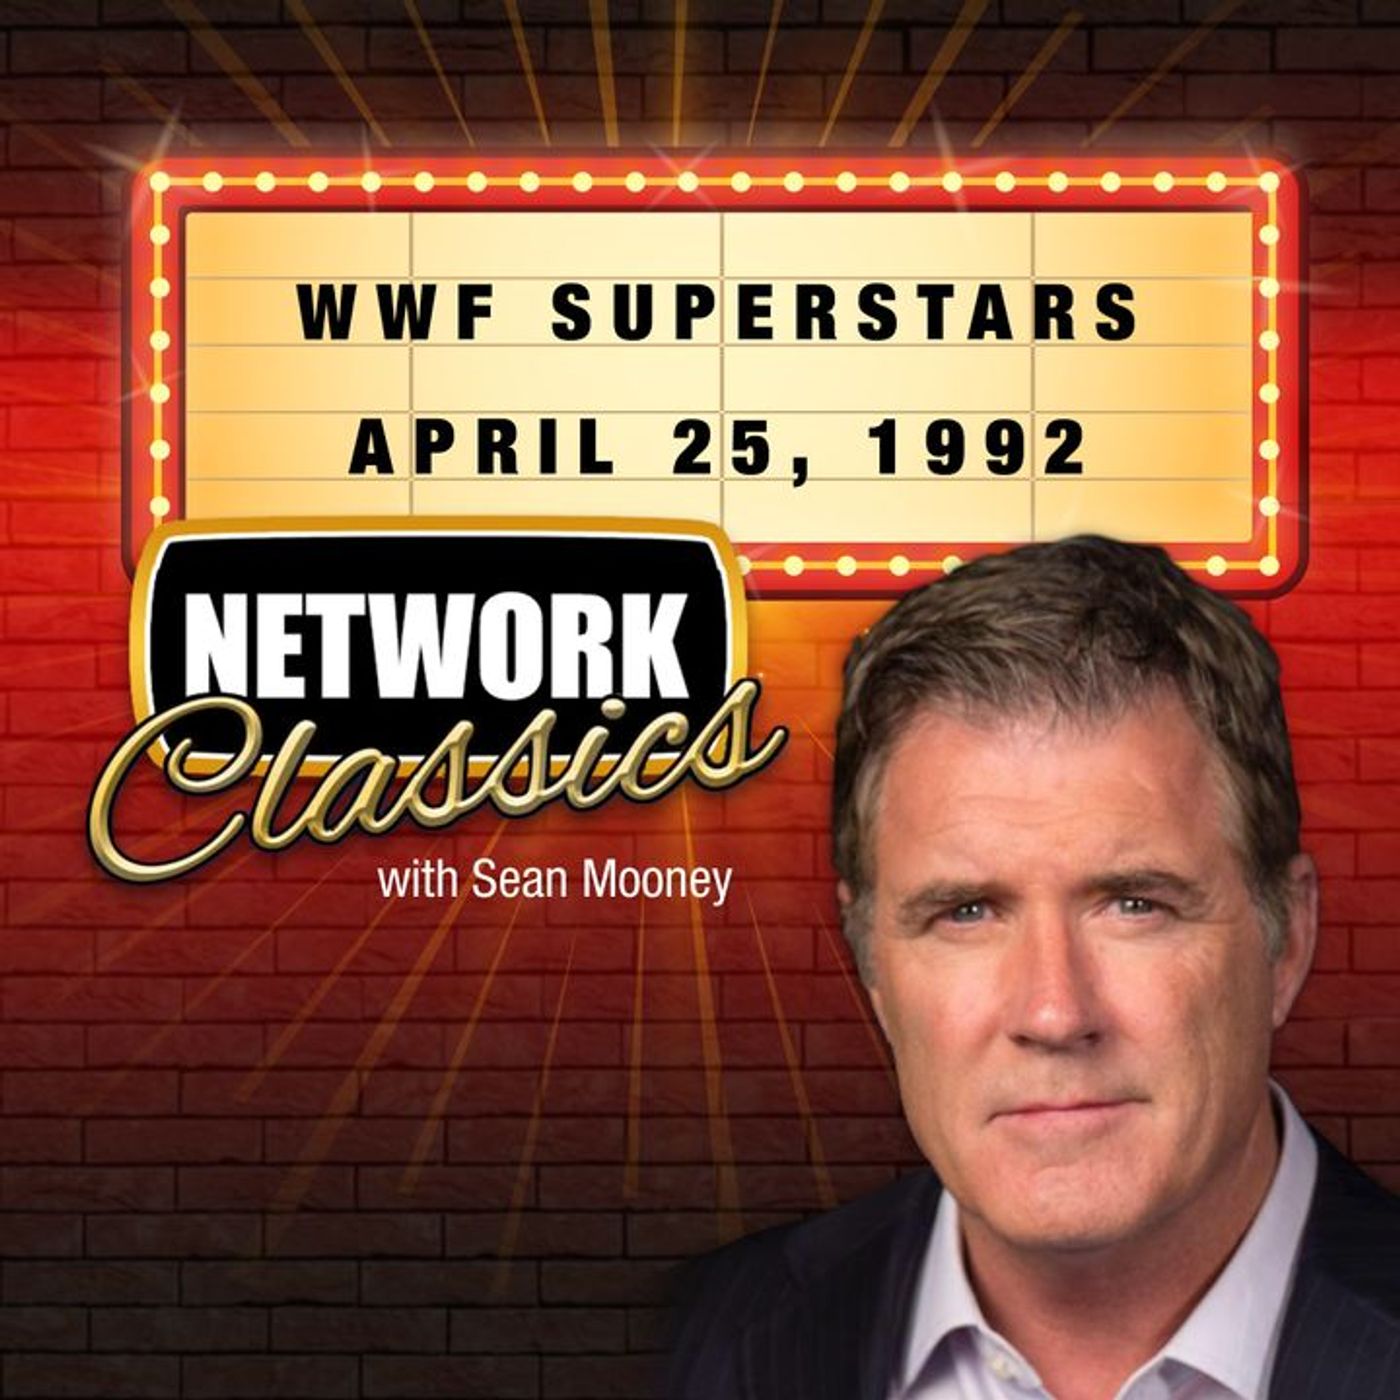 Network Classics: WWF Superstars - April 25, 1992: PRIME TIME VAULT